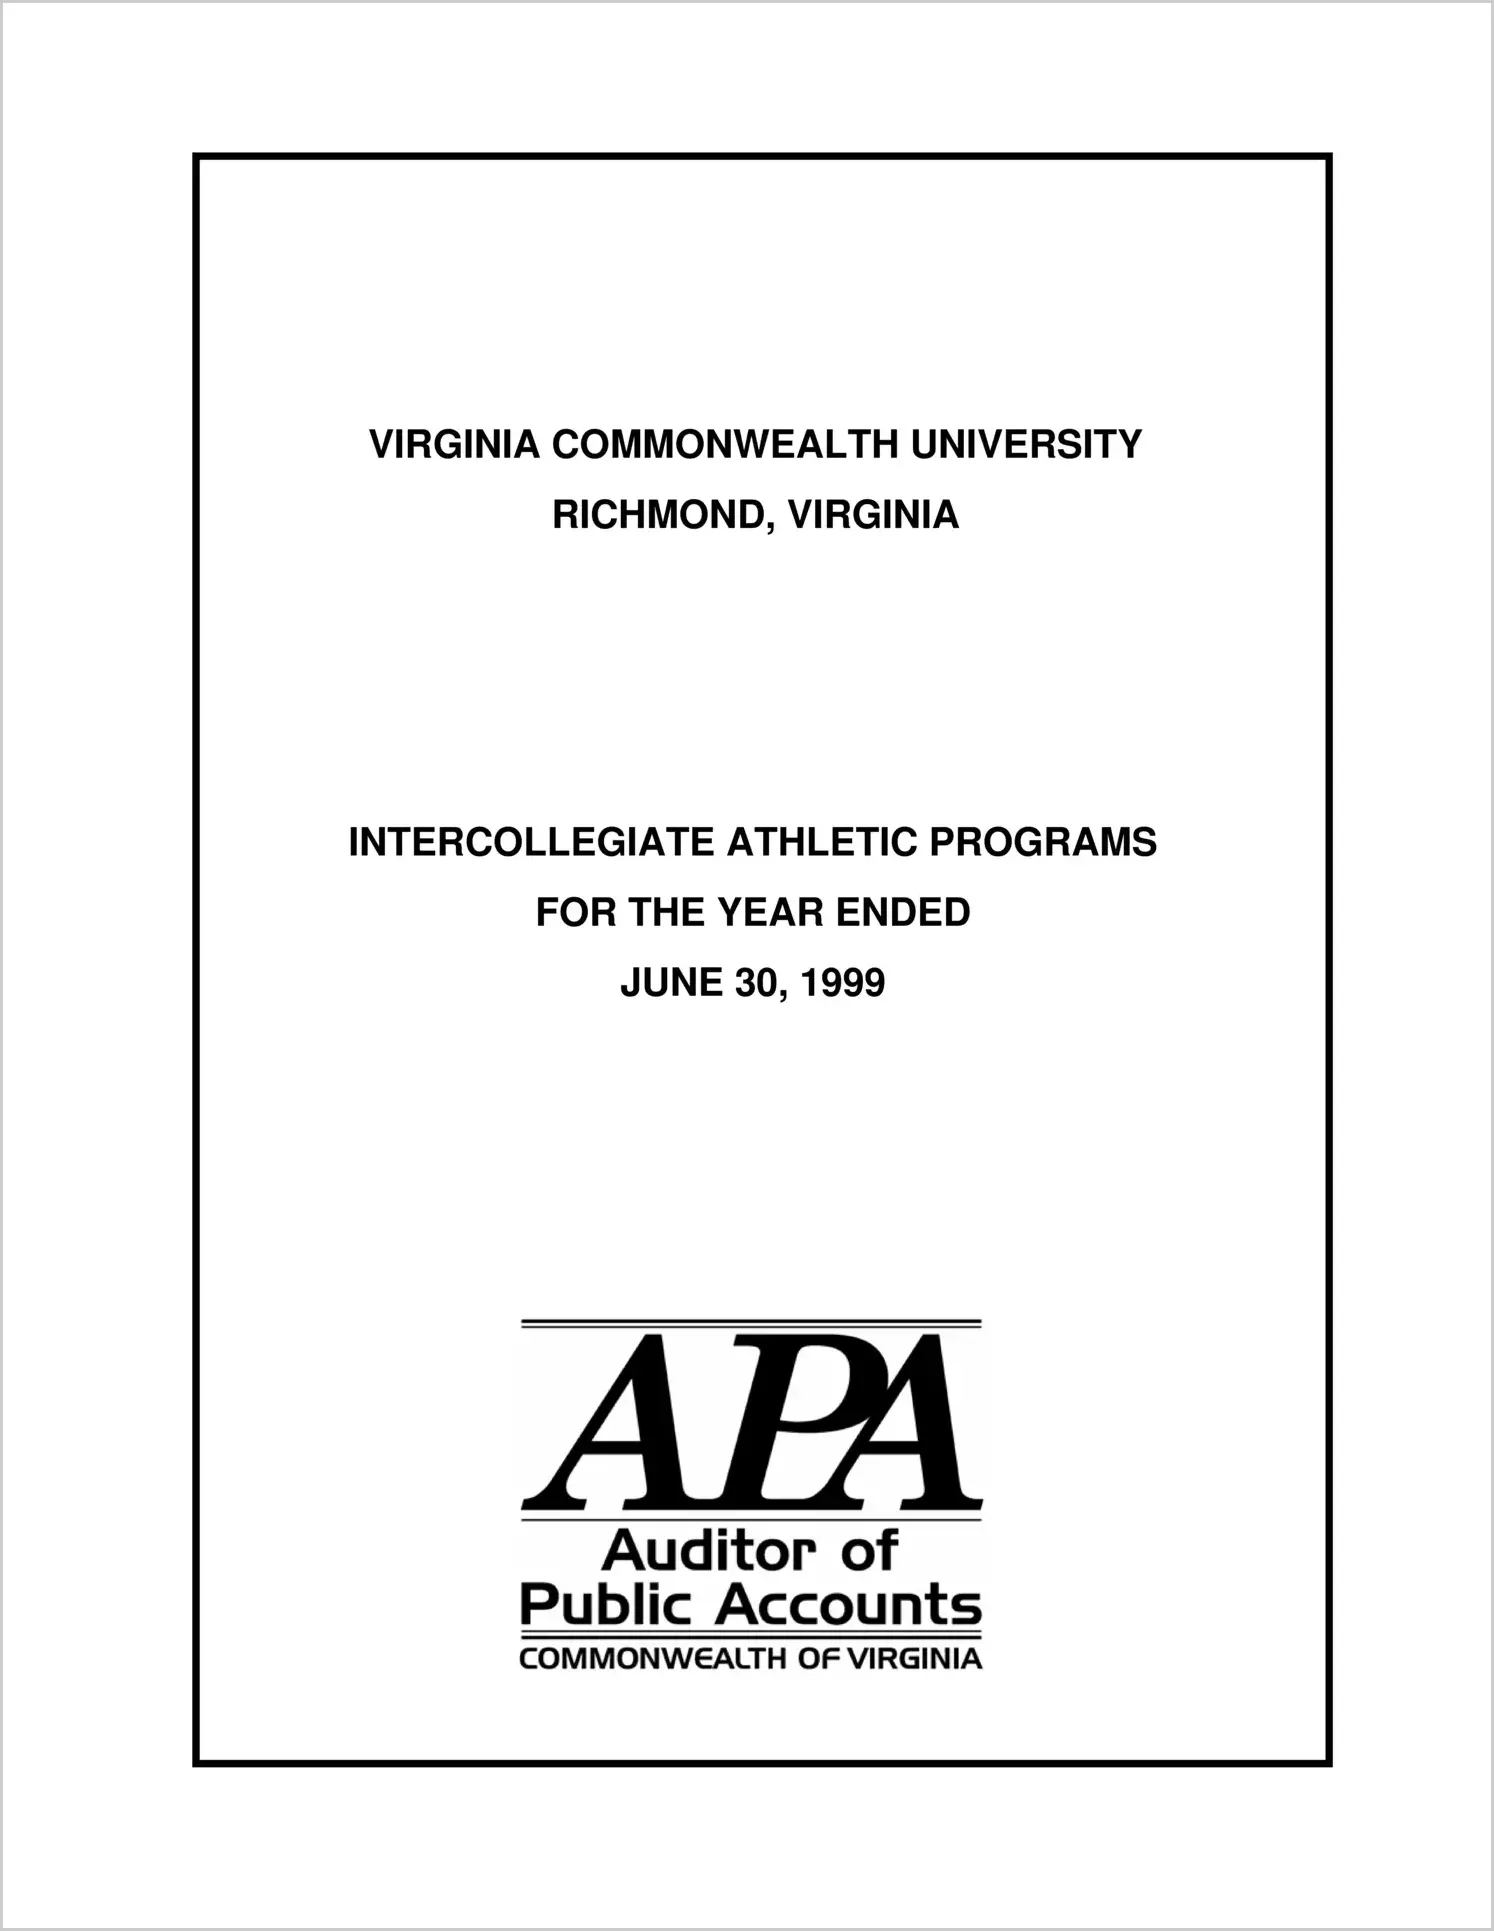 Virginia Commonwealth University Intercollegiate Athletics Programs for the year ended June 30, 1999